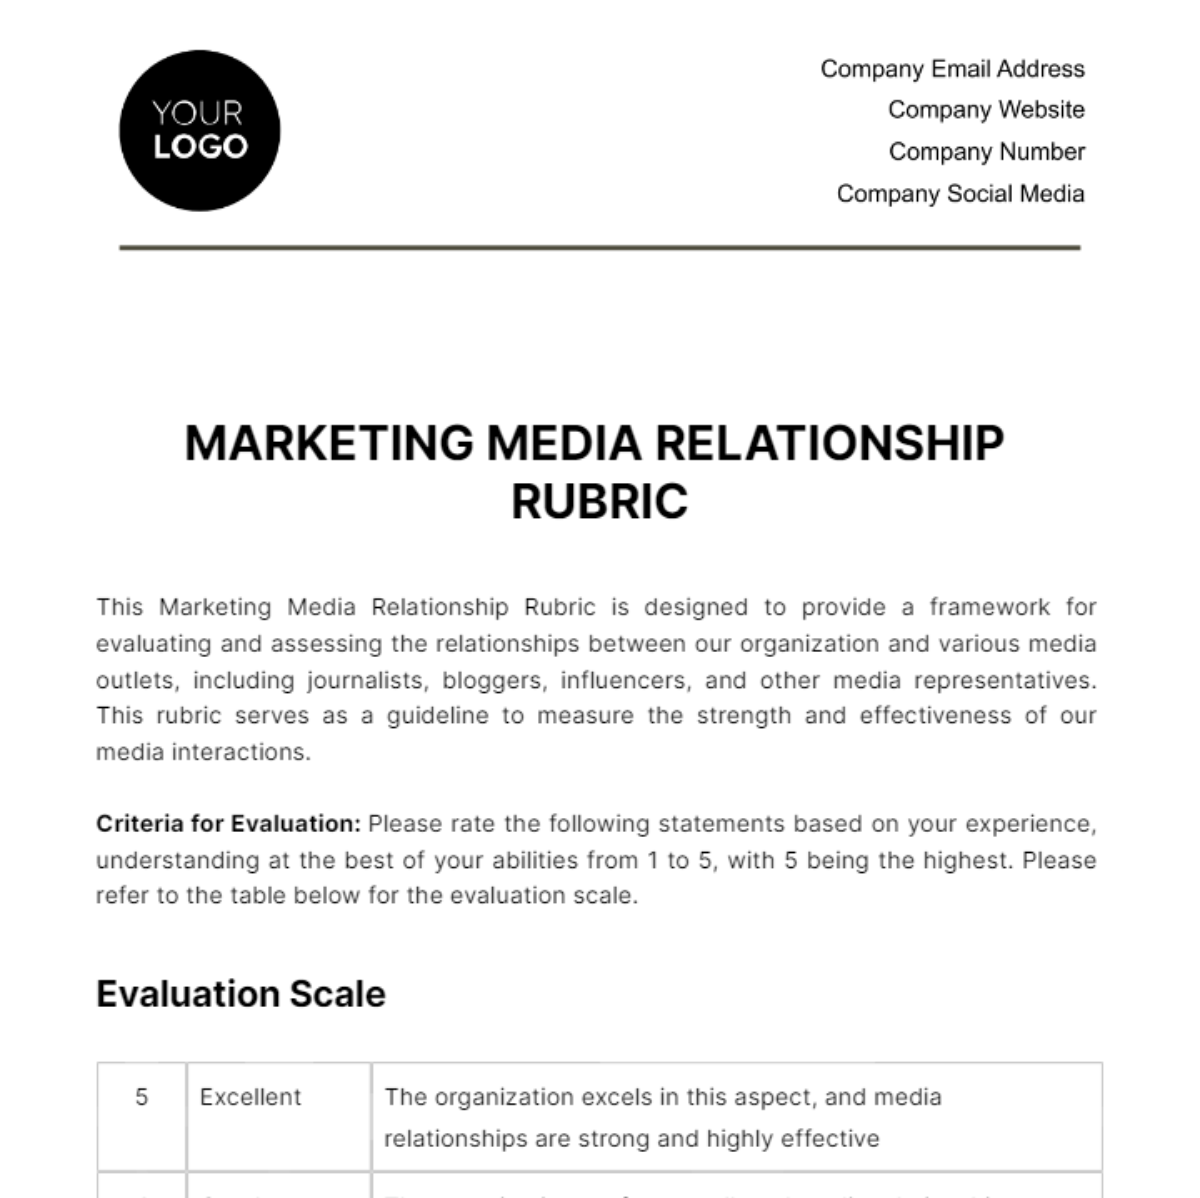 Marketing Media Relationship Rubric Template